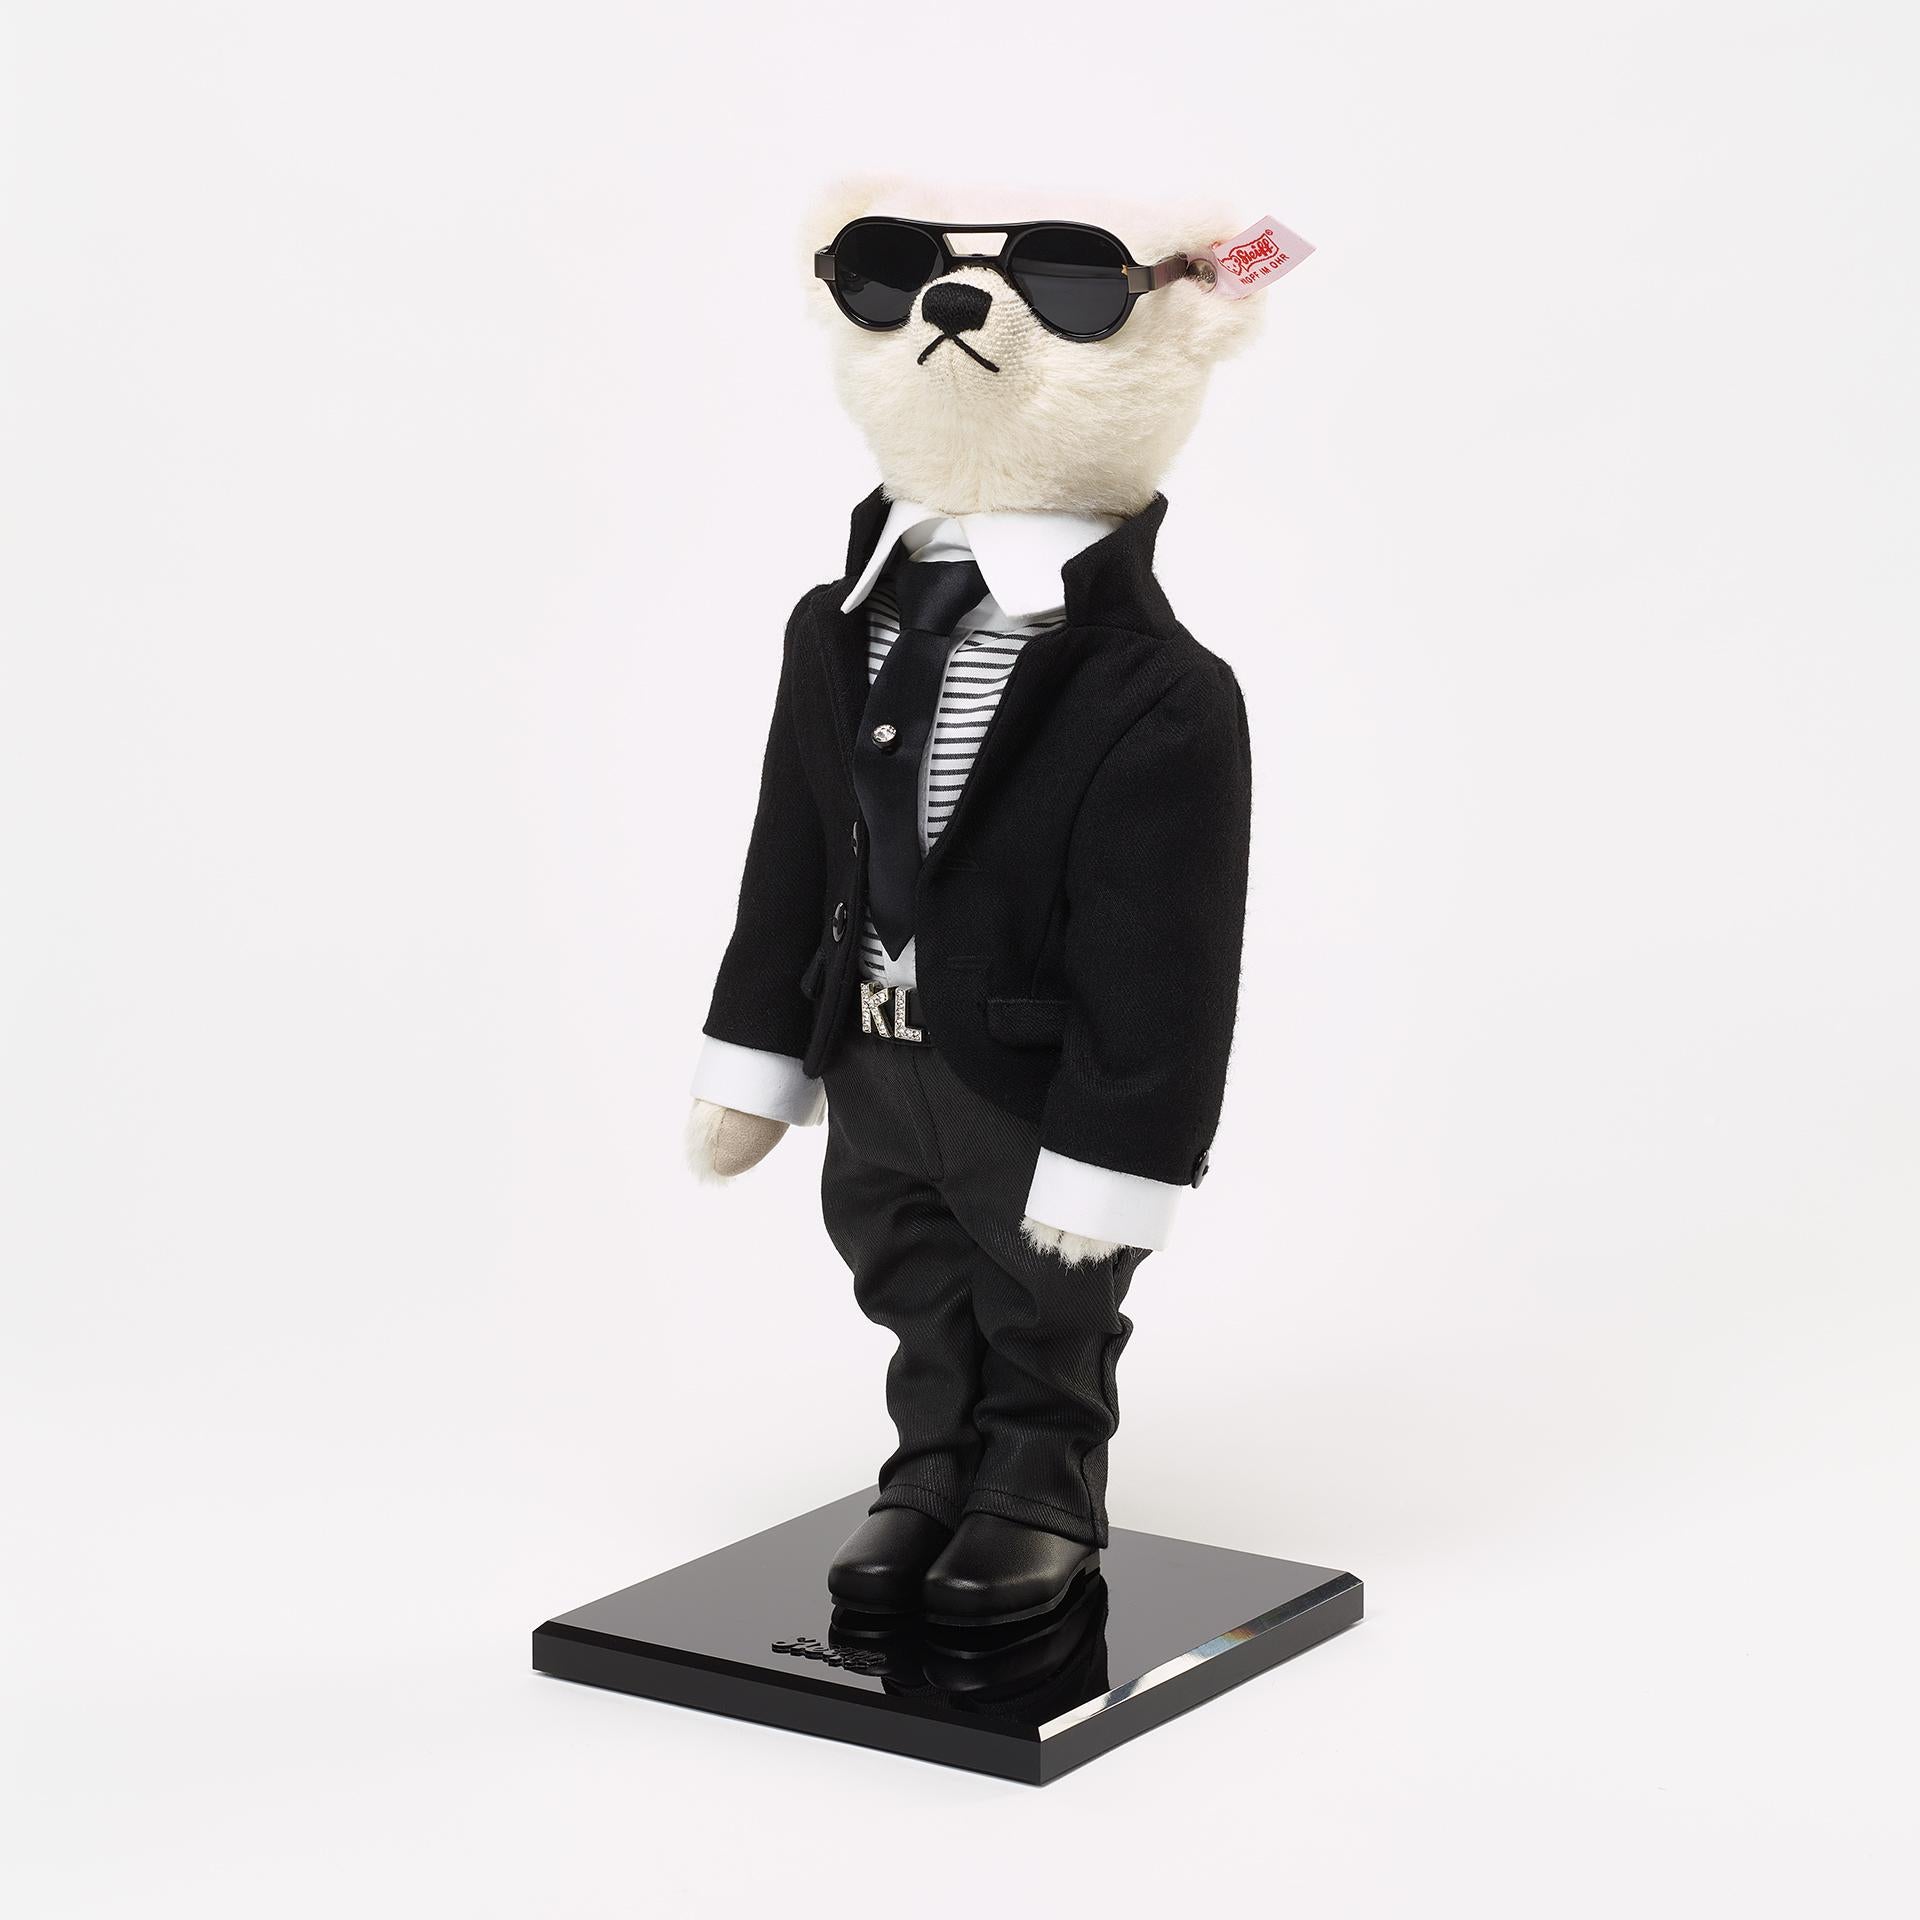 Karl Lagerfeld ( 1933 -2019 ) 
Steiff Teddy Bear with the effigy of Karl Lagerfeld 